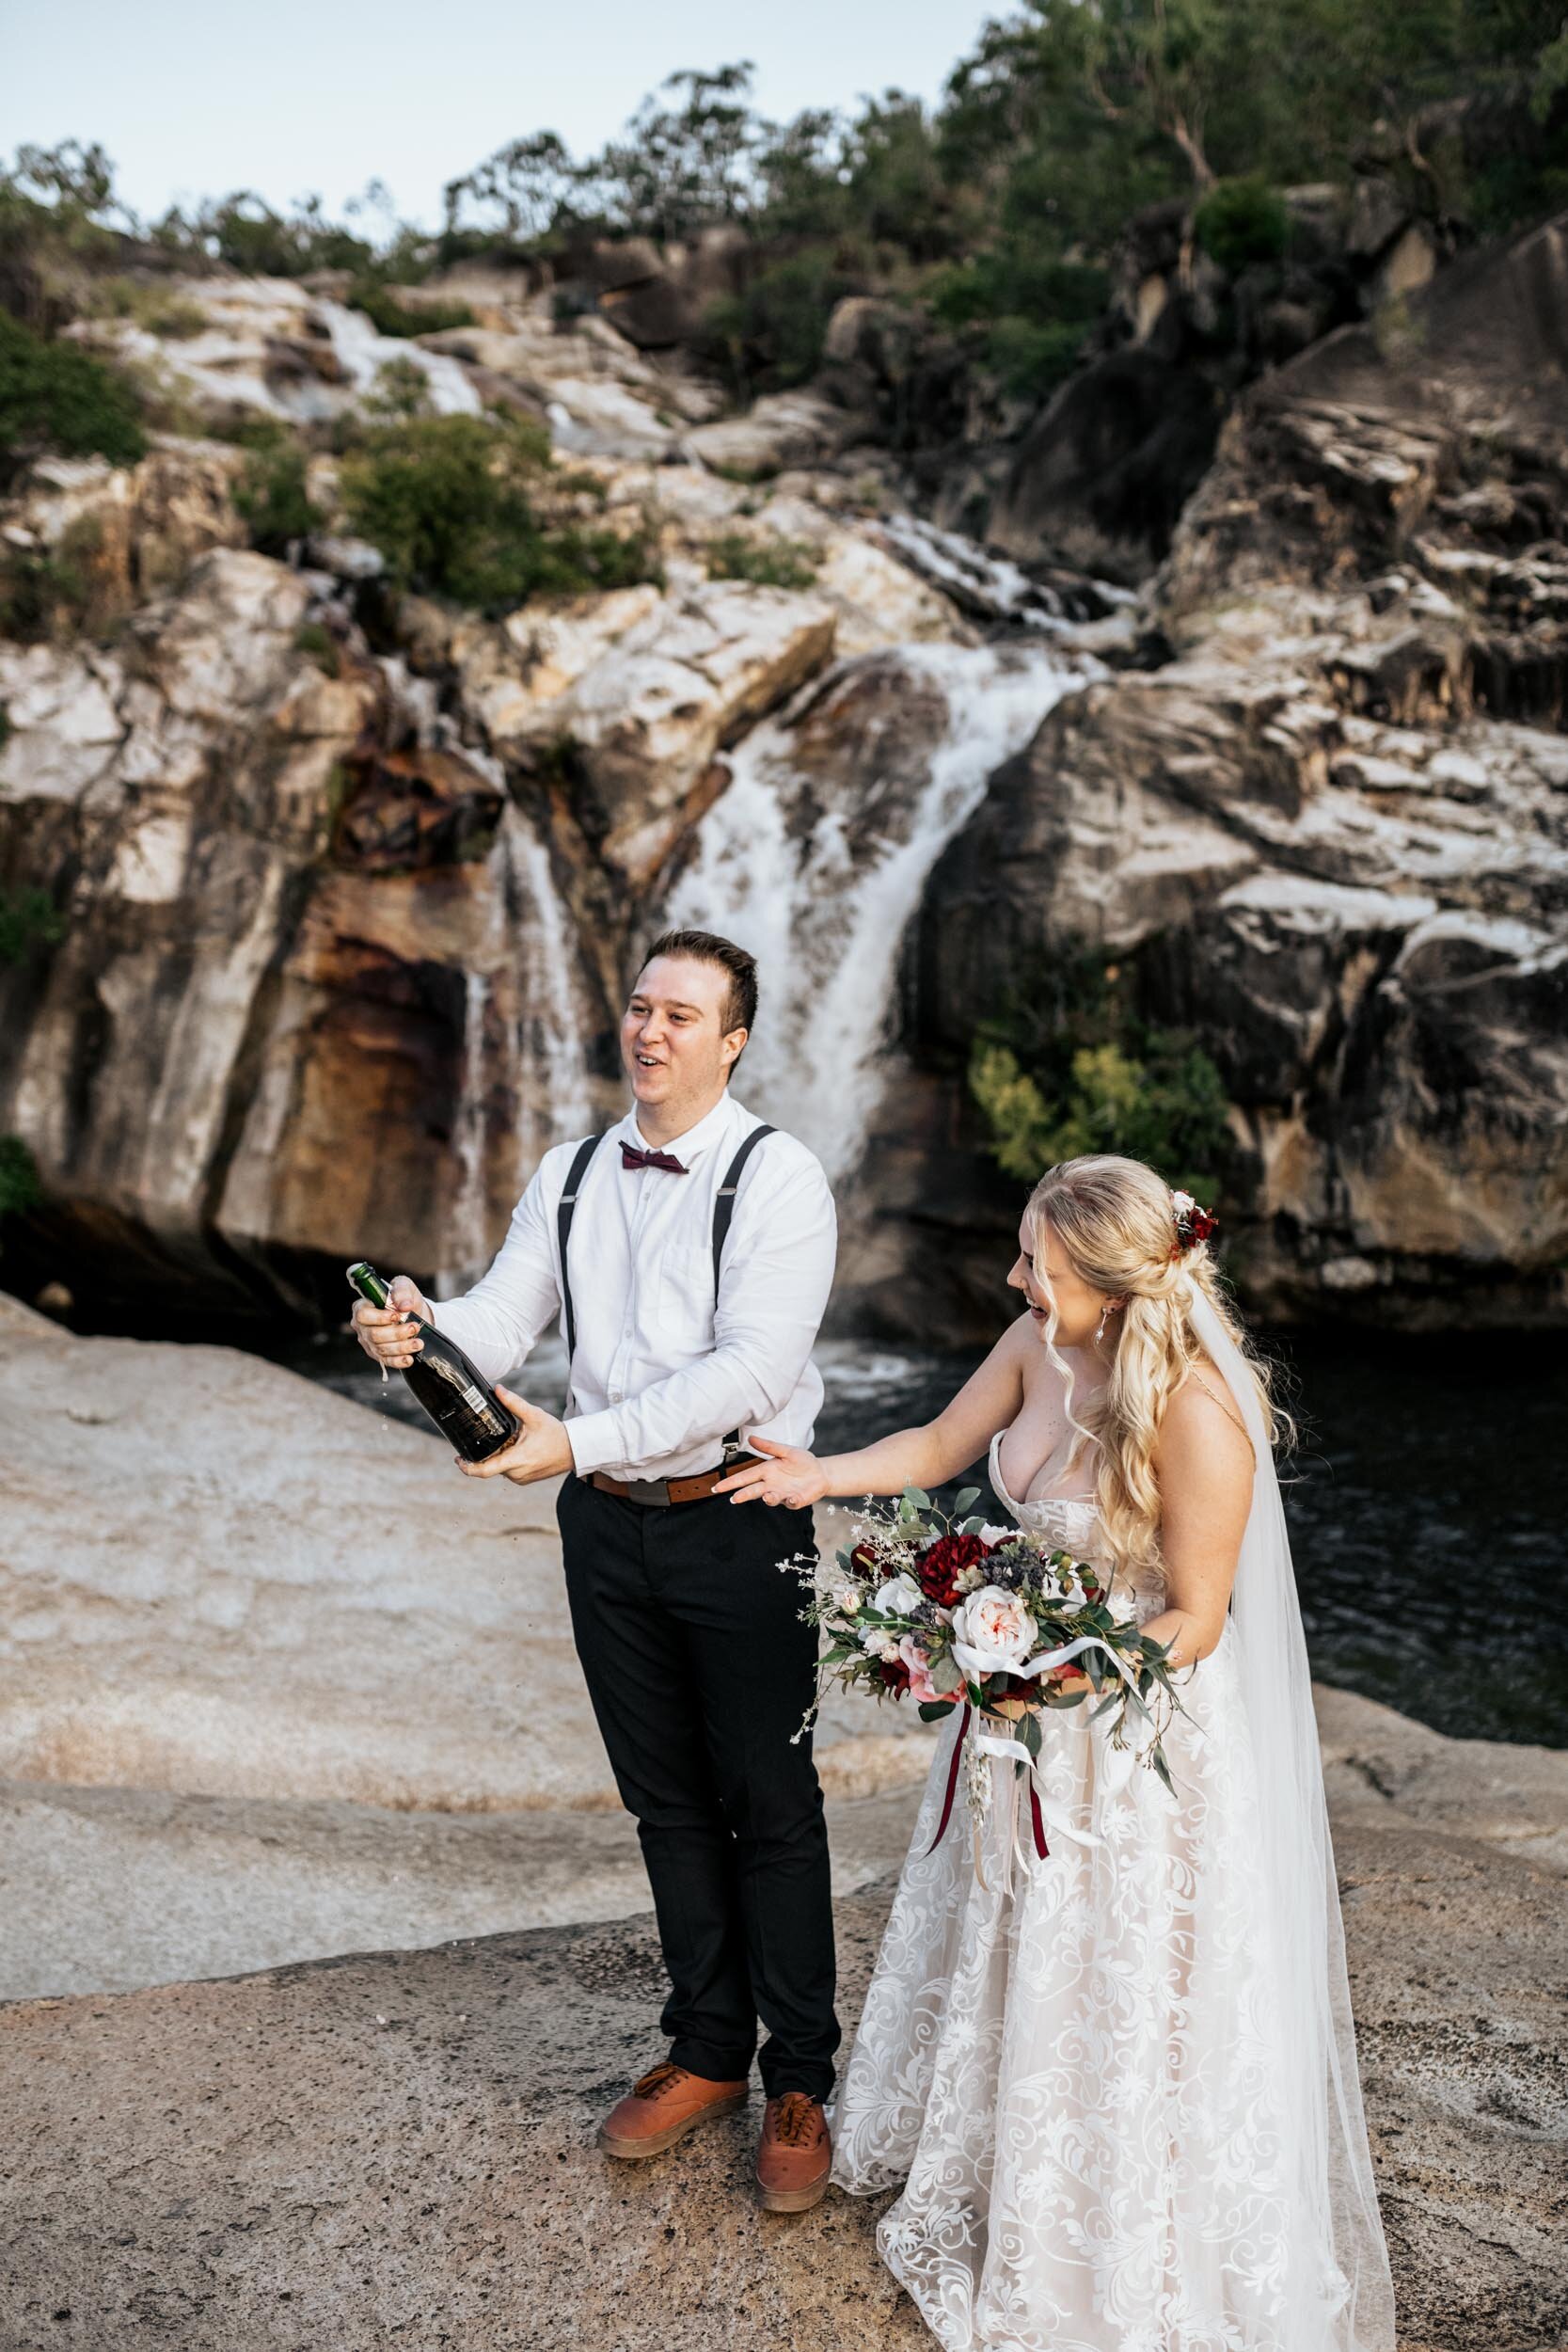 The Raw Photographer - Cairns Wedding Photographer - Queensland Adventure Elopment Photography - Emeral Creek Mareeba Tablelands-37.jpg